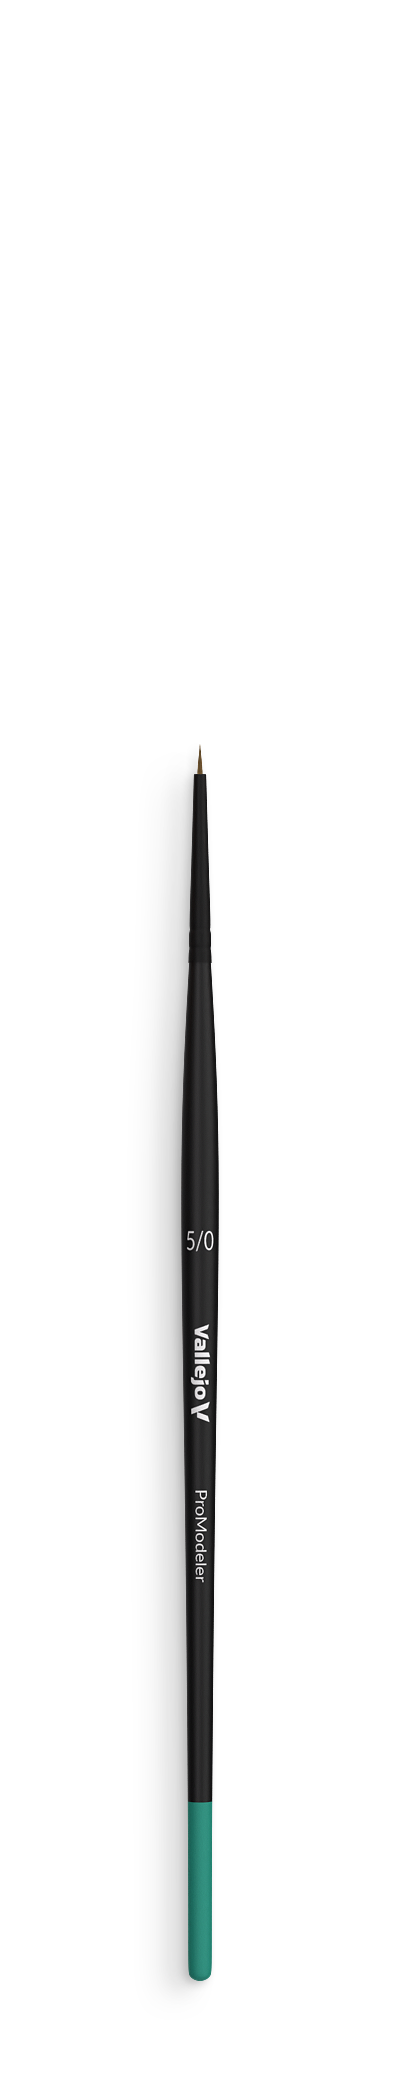 B01050 - Pro Modeler - NATURAL HAIR - ROUND BRUSH NO. 5/0 - Vallejo Pro Modeler